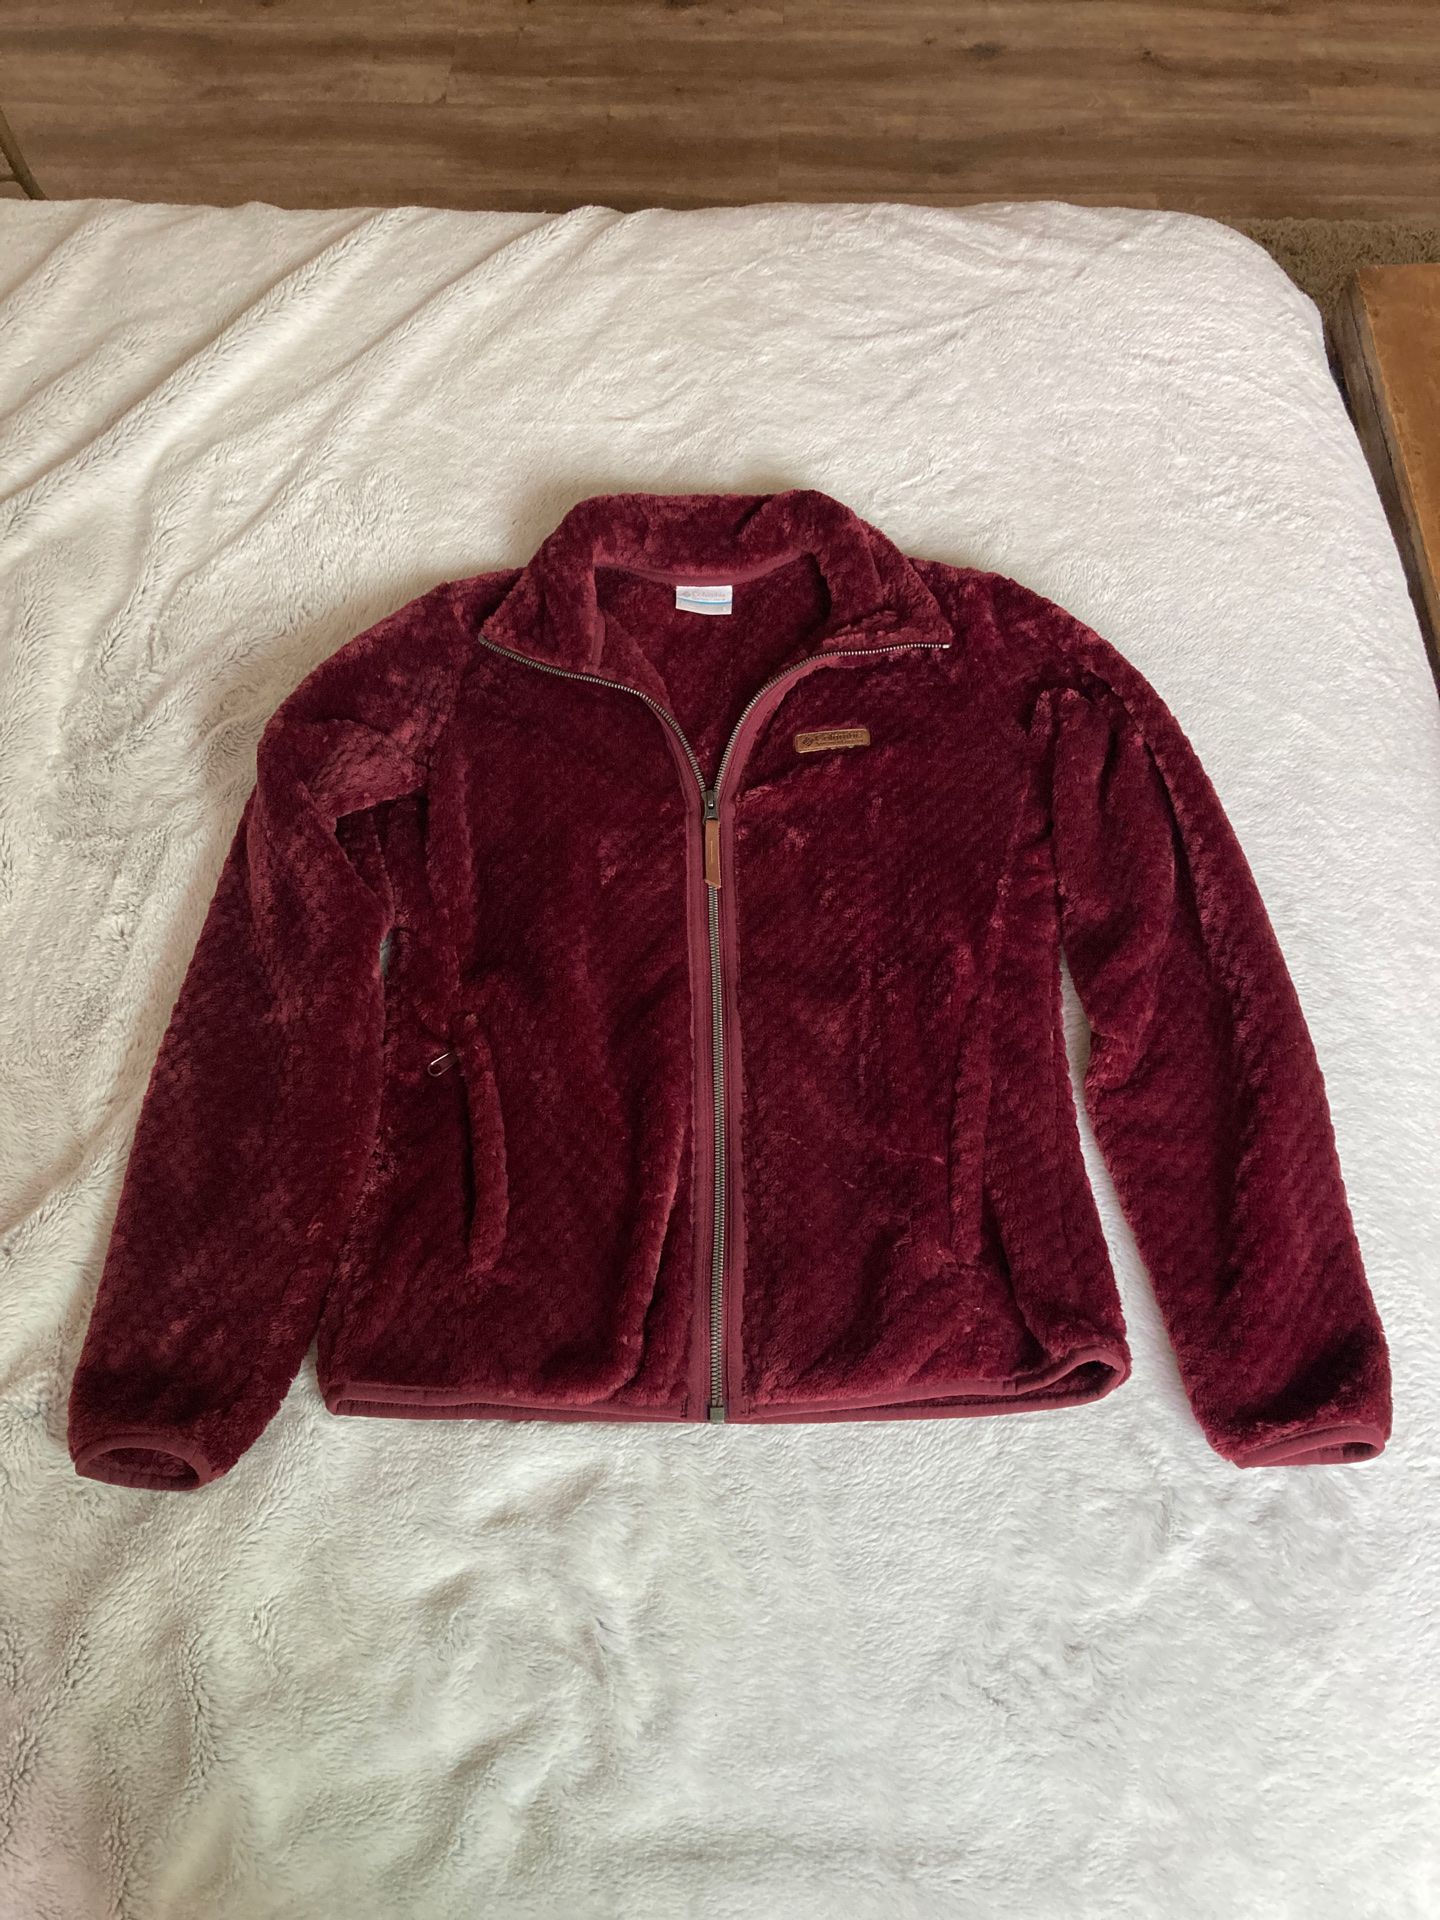 Sherpa Columbia jacket - women’s fire side size small